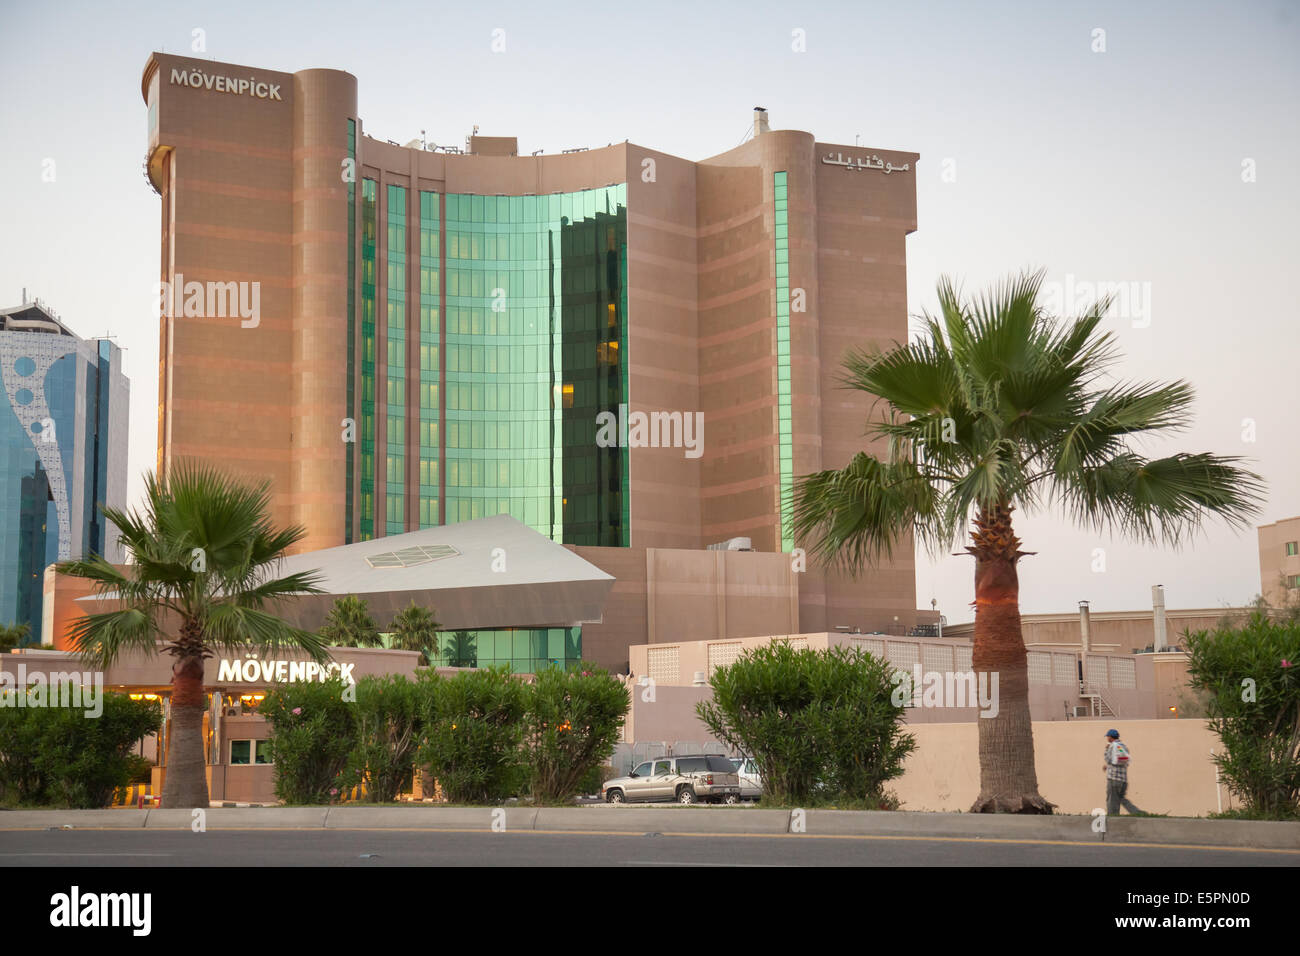 DAMMAM, SAUDI ARABIA - MAY 15, 2014: Movenpick hotel exterior in Dammam city, Saudi Arabia Stock Photo